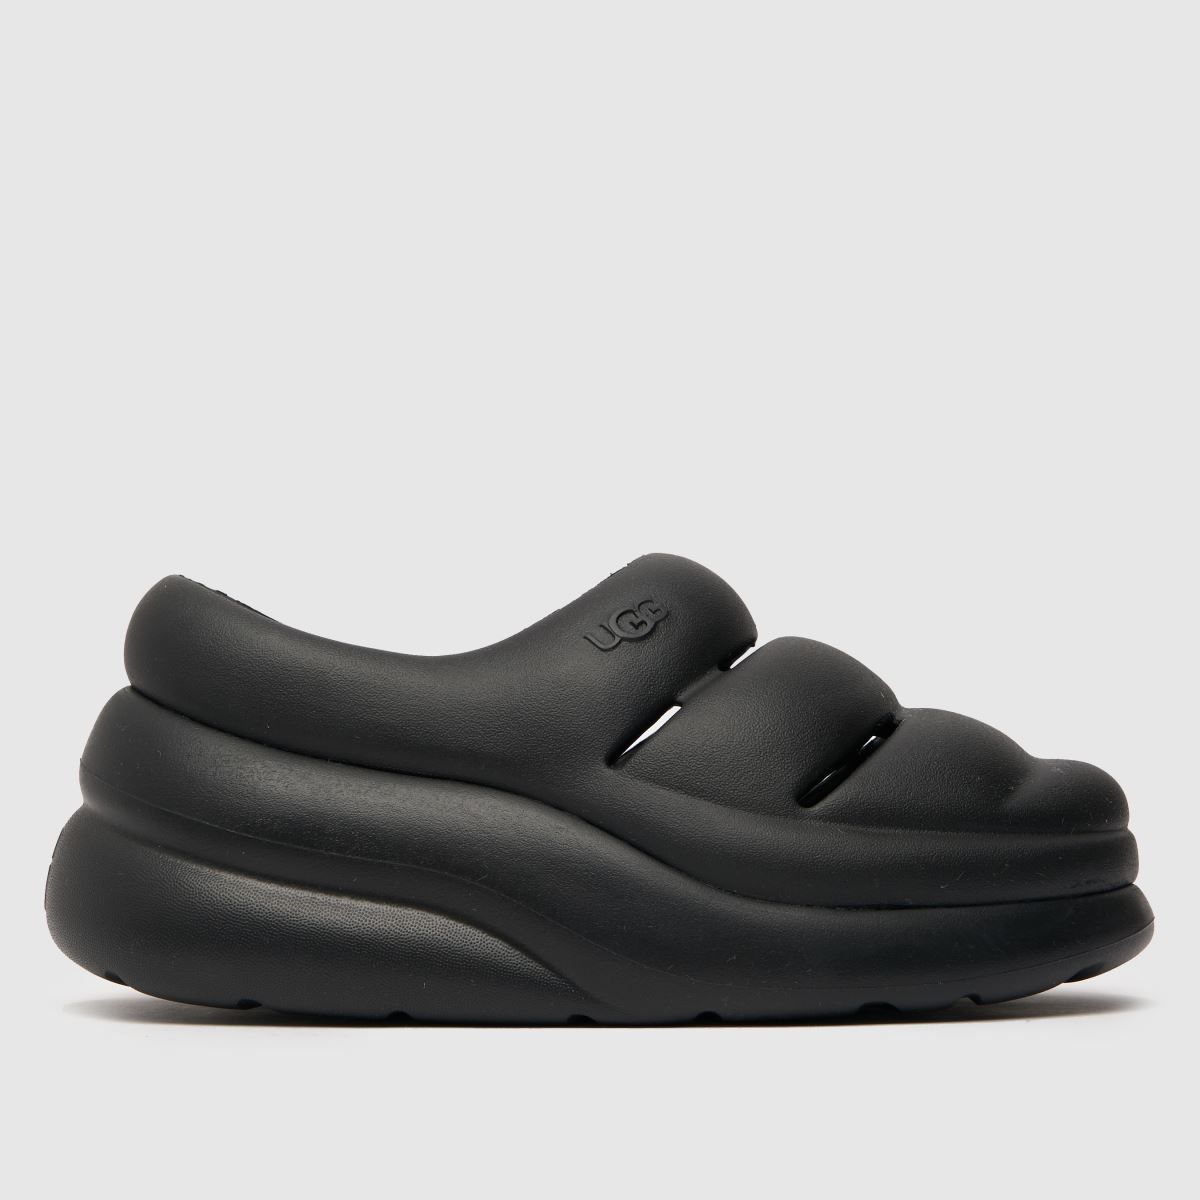 UGG sport yeah clog sandals in black | Schuh